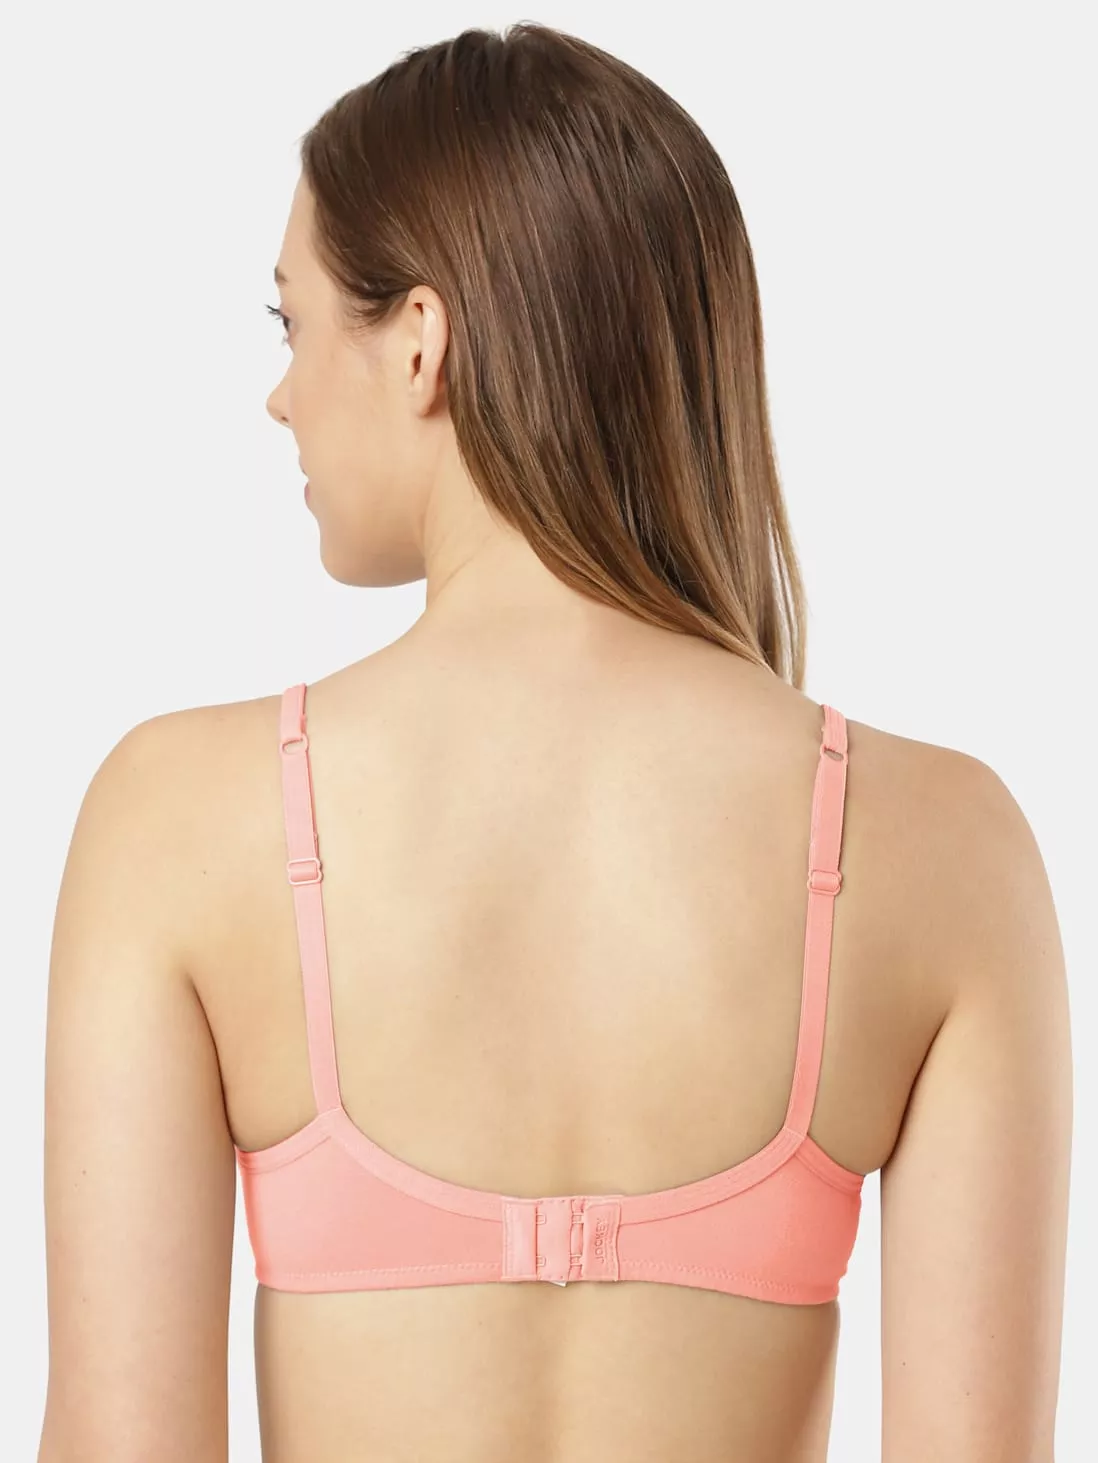 Buy Seamless Jockey bra Style # 1722 Secret Shaper (B, Black, 38) at